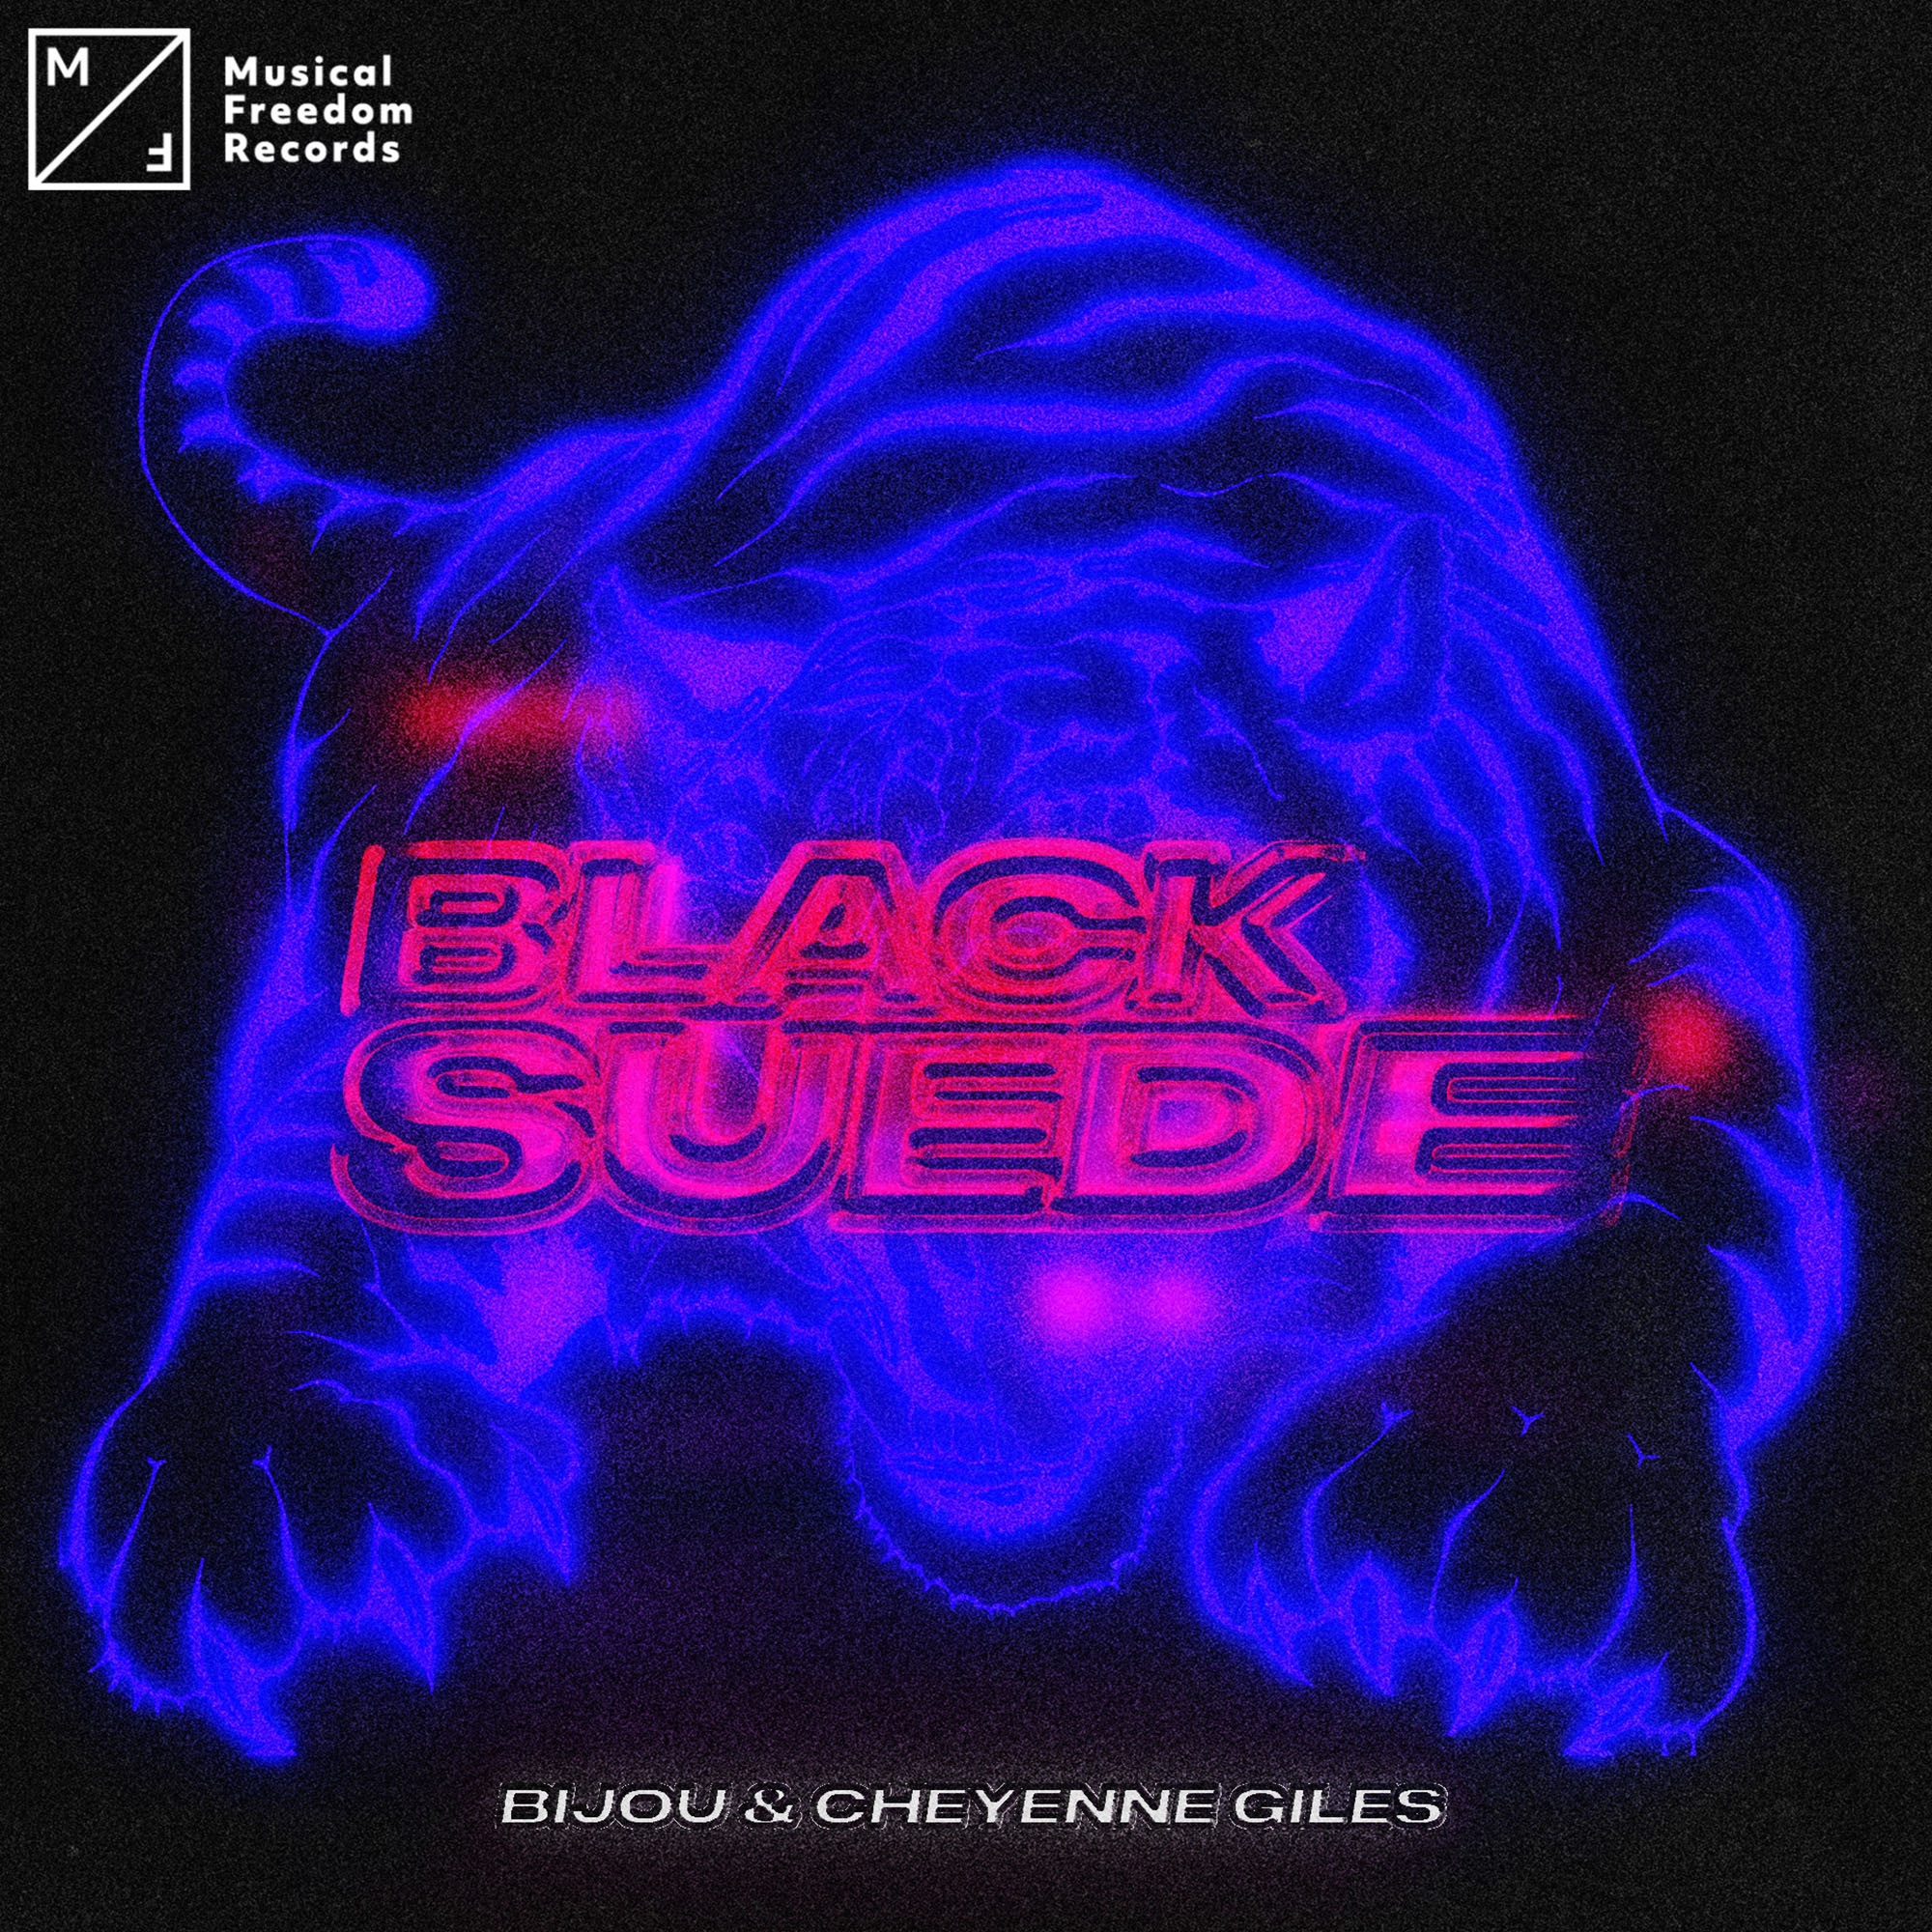 BIJOU & Cheyenne Giles - Black Suede - Single